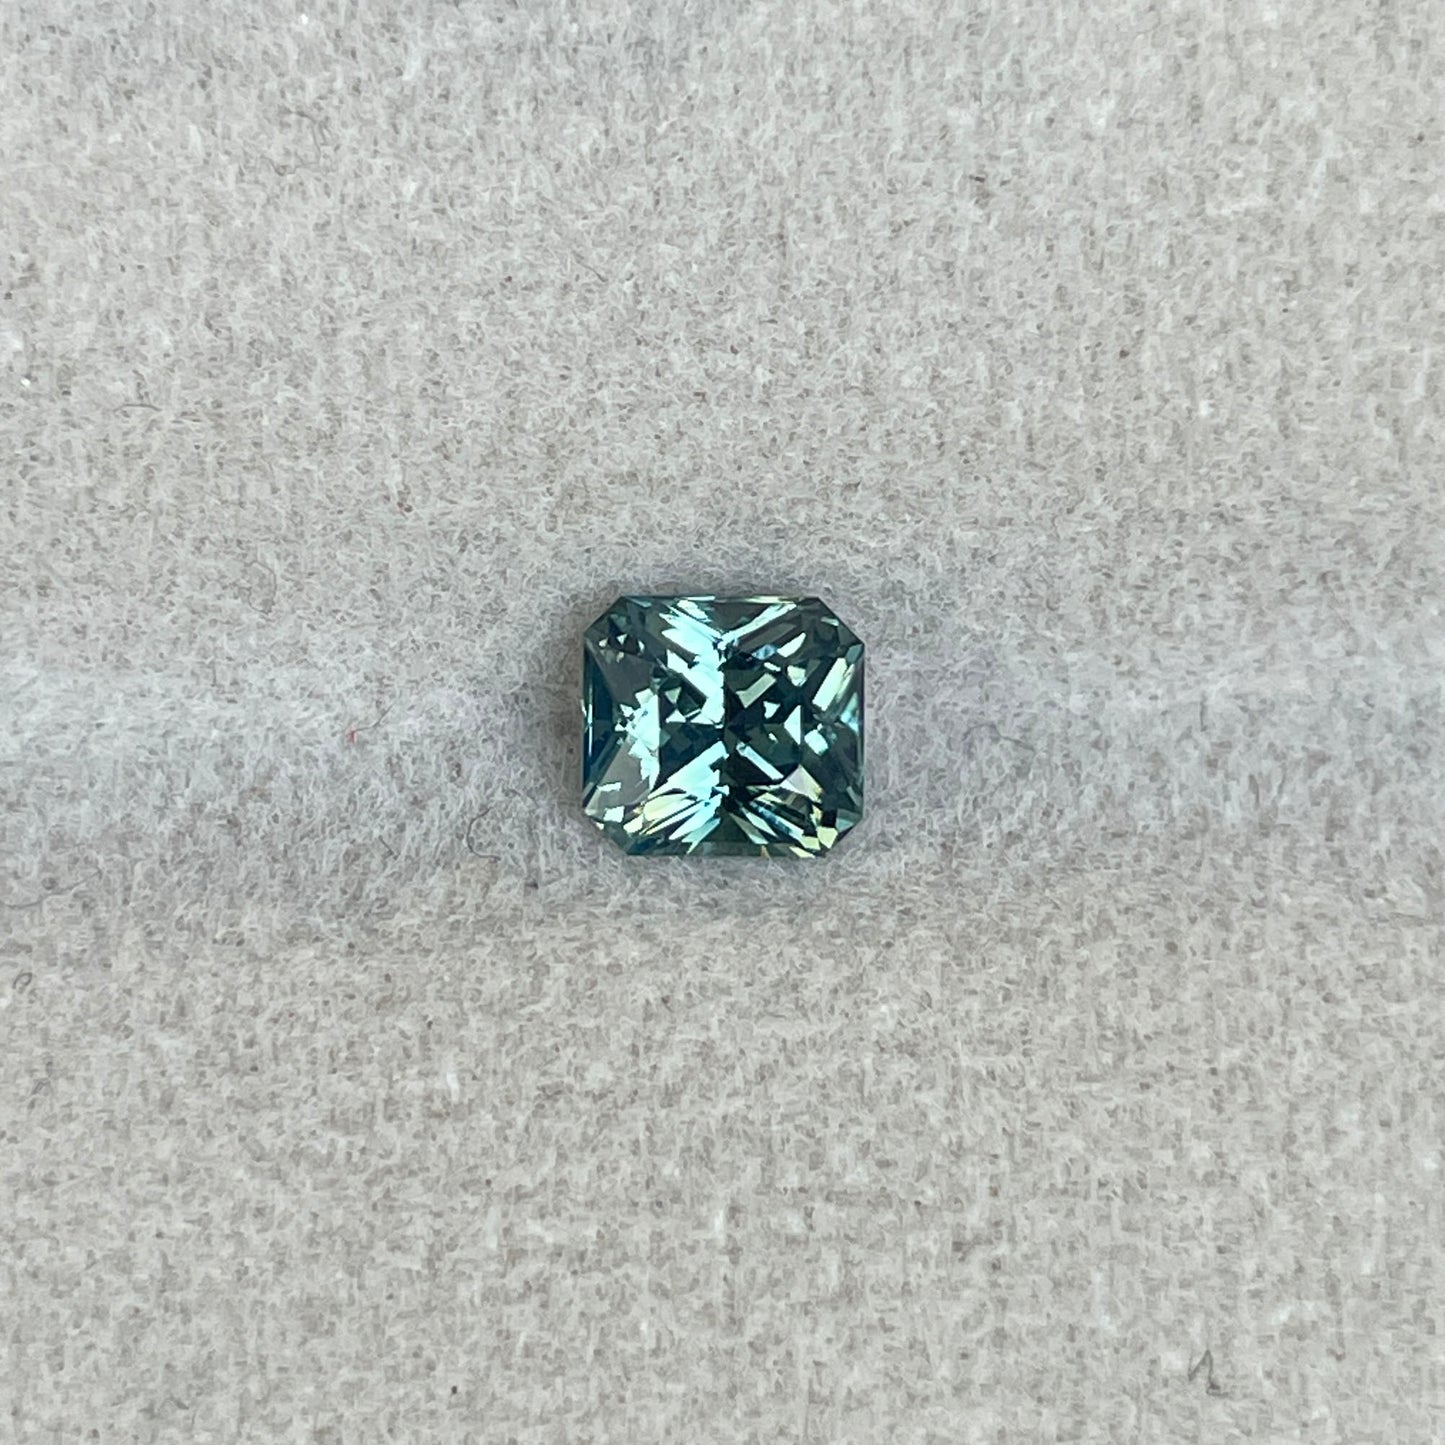 Greenish blue sapphire, 1.00 crt.